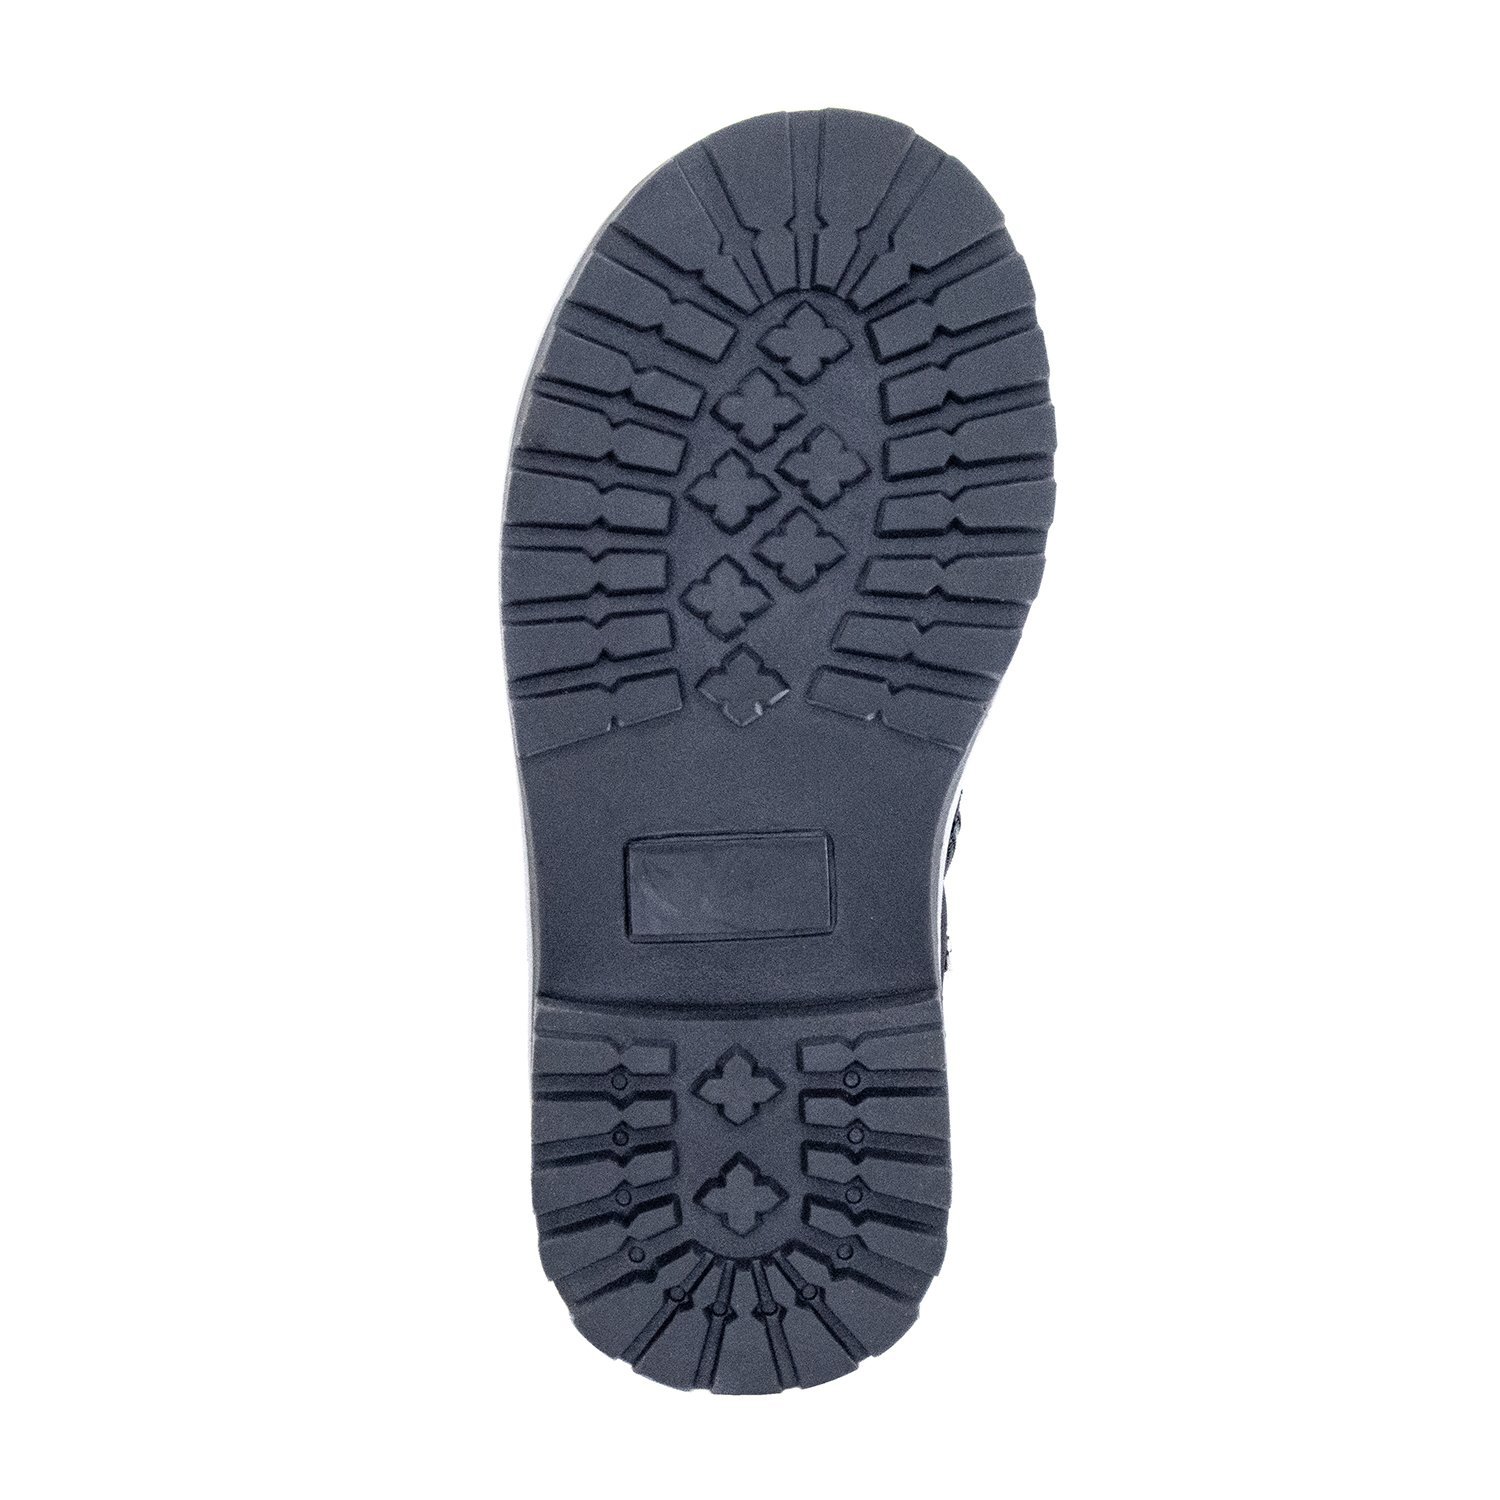 Детские ботинки ORTHOBOOM 87054-03 глубокий серый